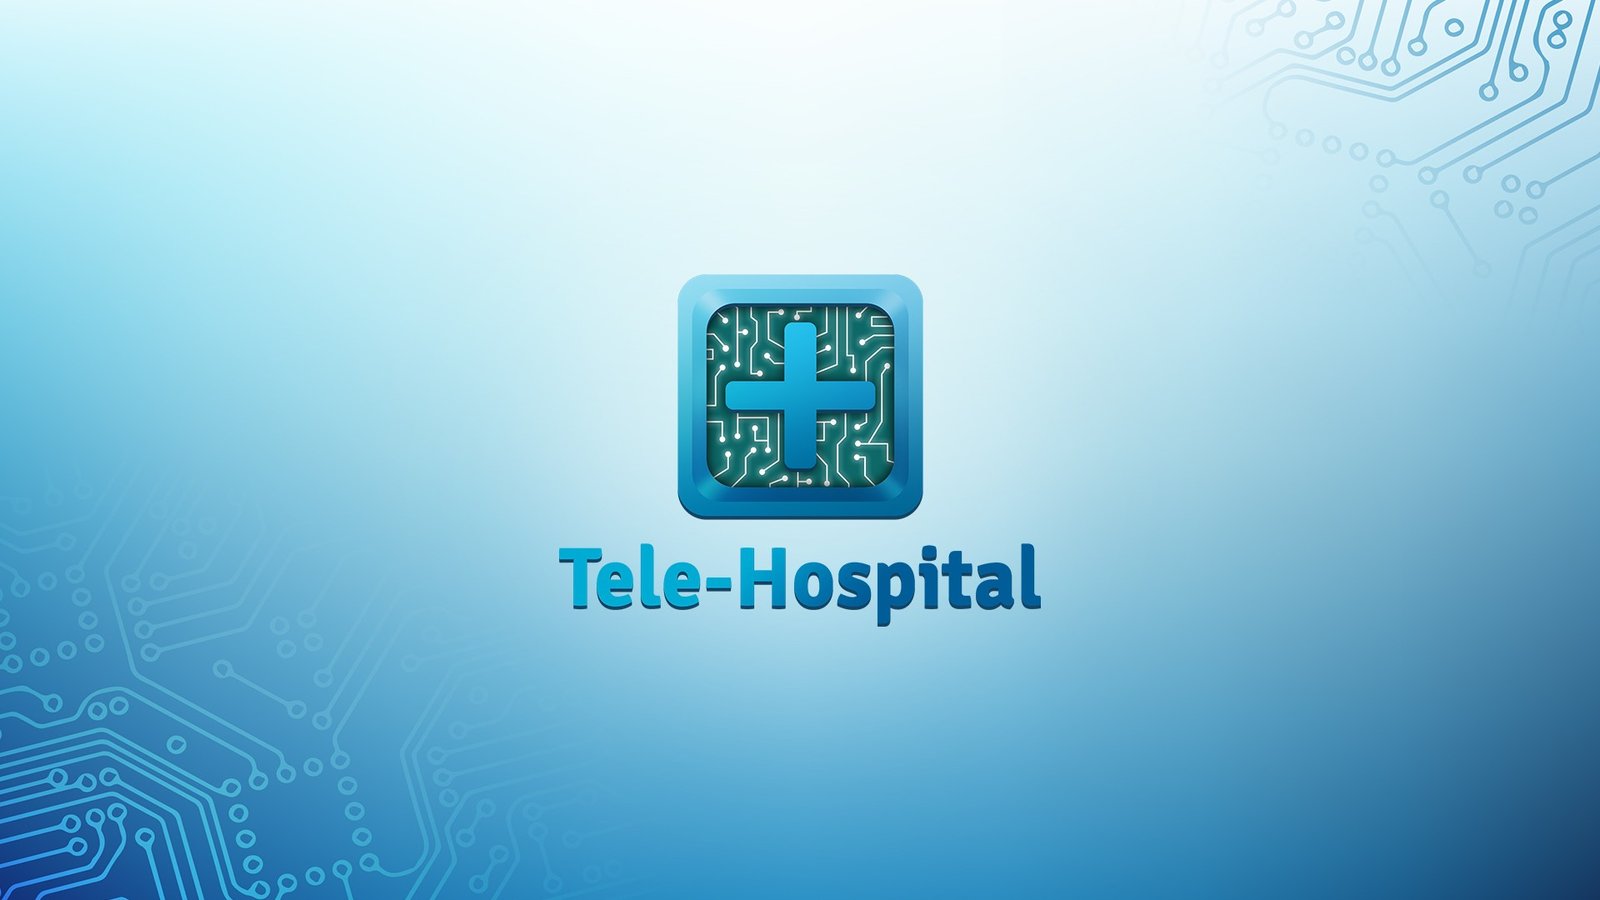 logo tele-hospital sur fond bleu